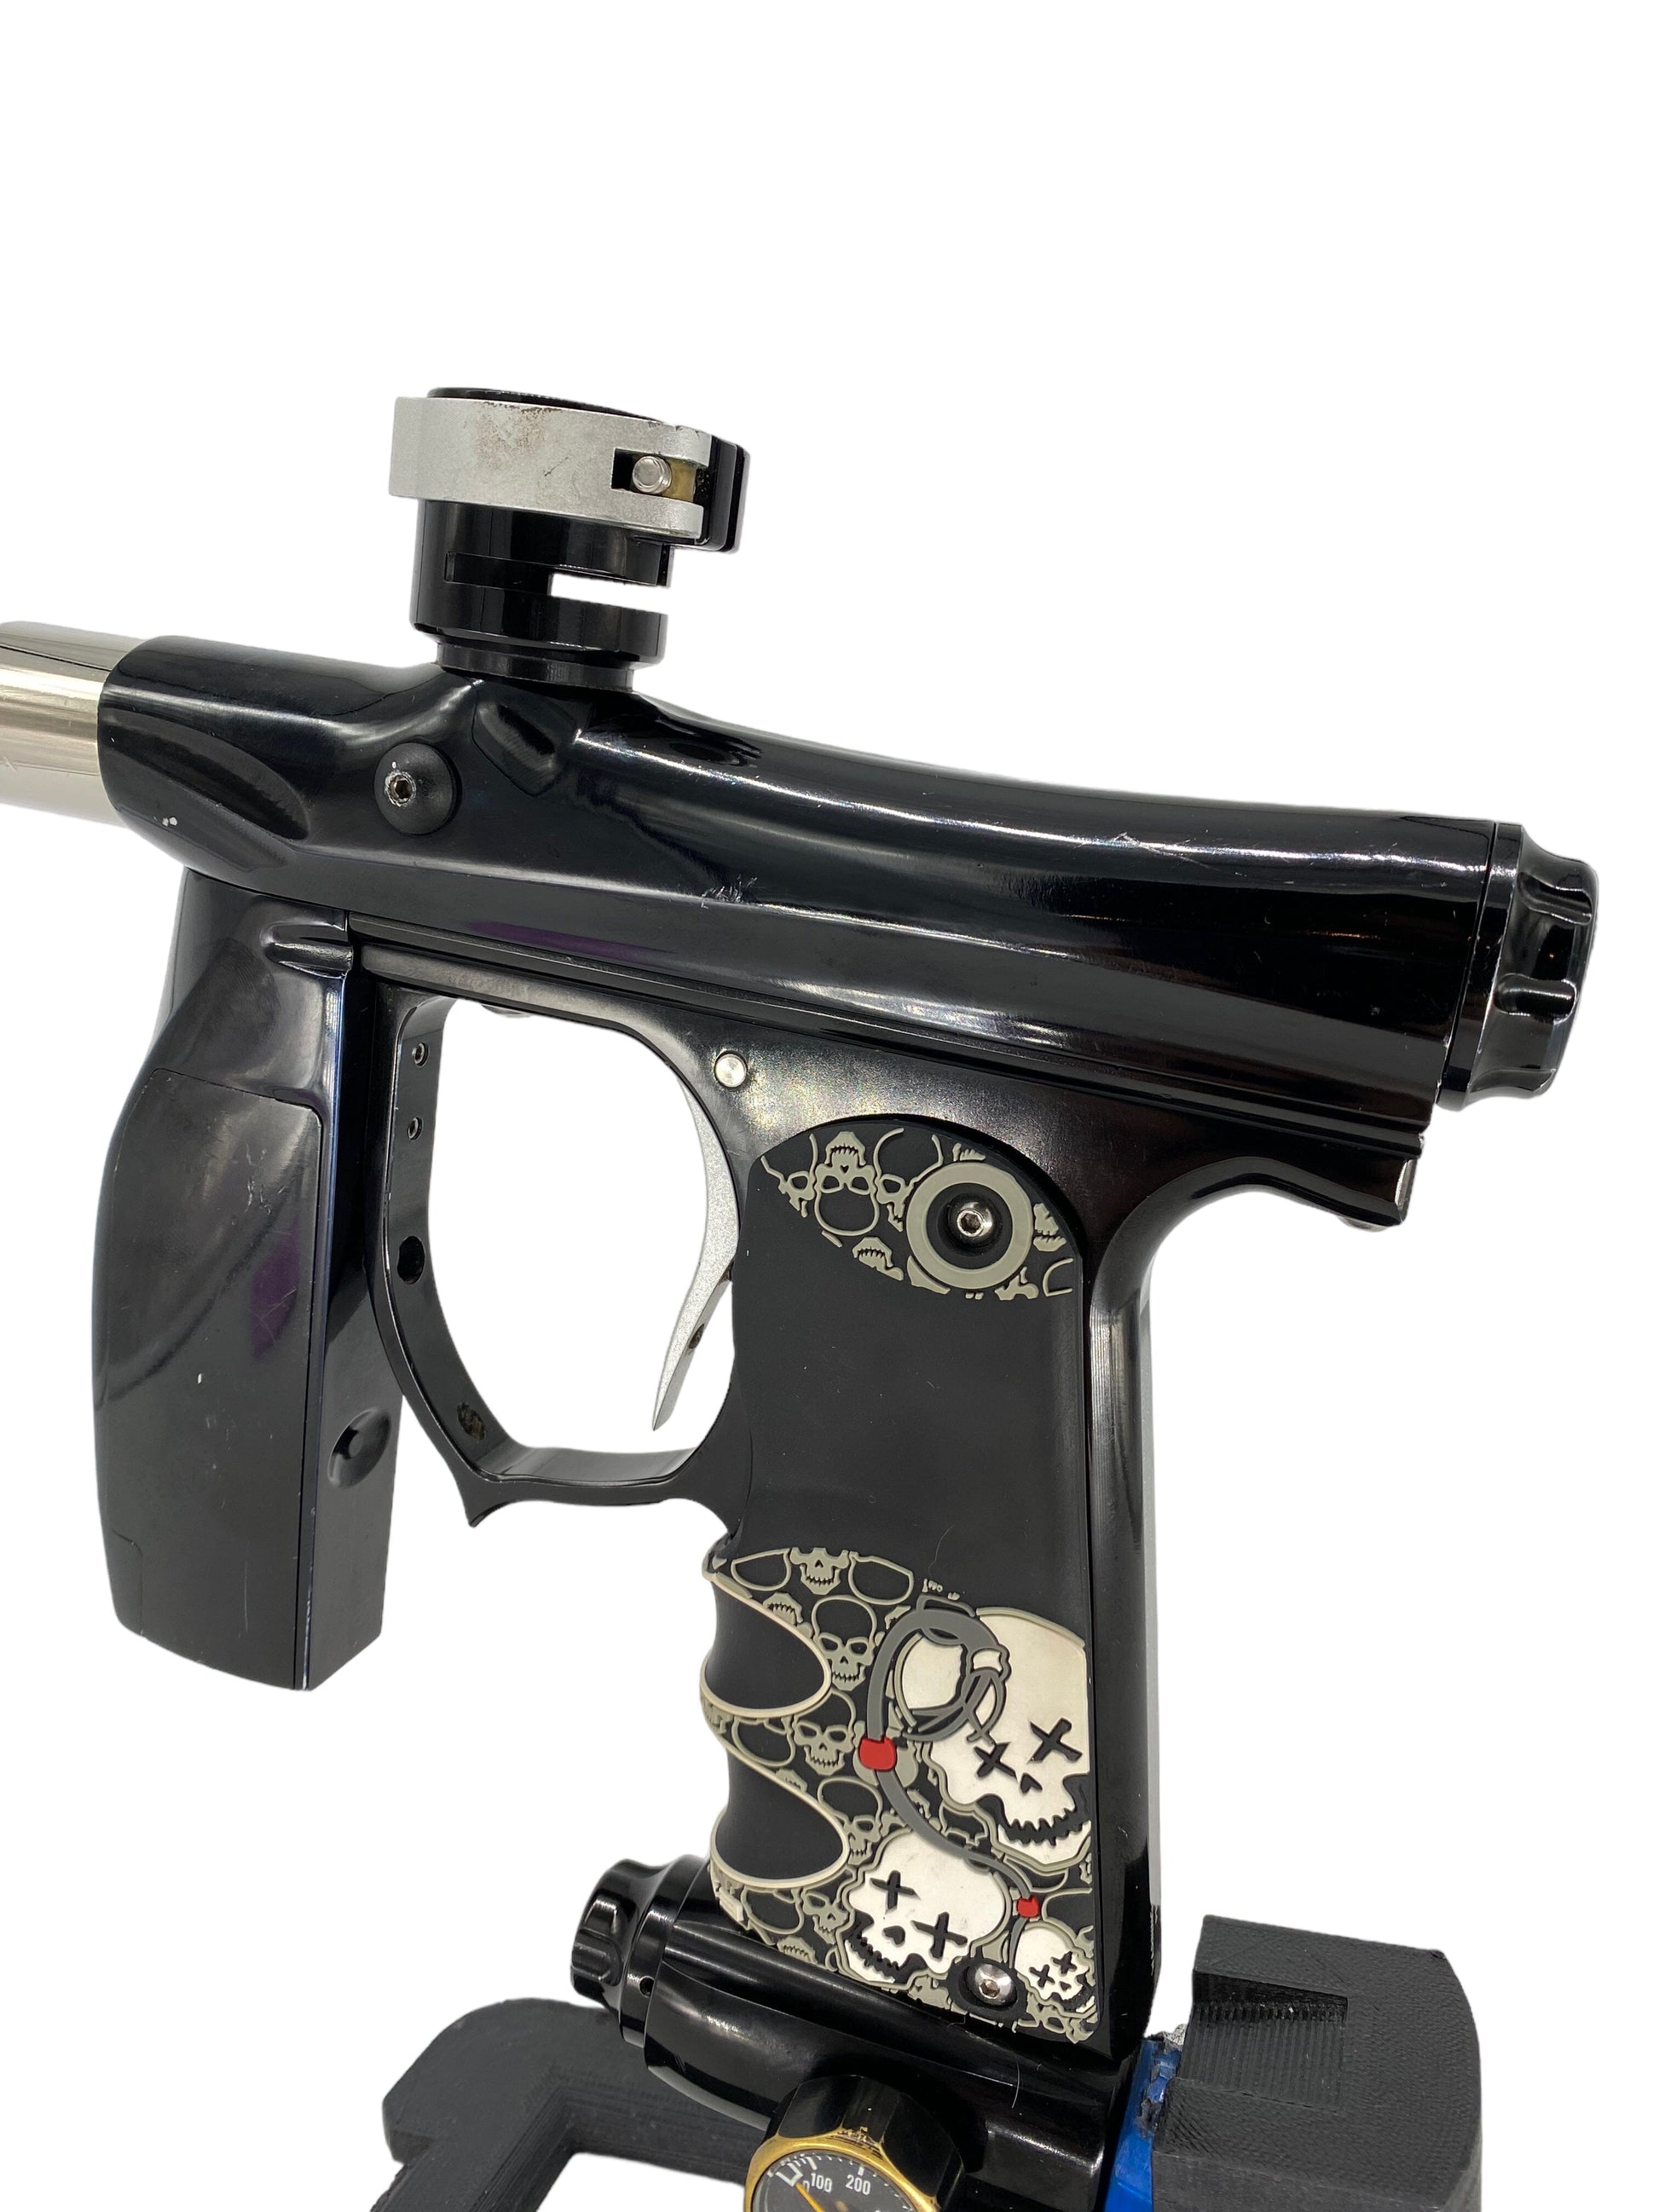 Used Invert Mini Paintball Gun from CPXBrosPaintball Buy/Sell/Trade Paintball Markers, Paintball Hoppers, Paintball Masks, and Hormesis Headbands